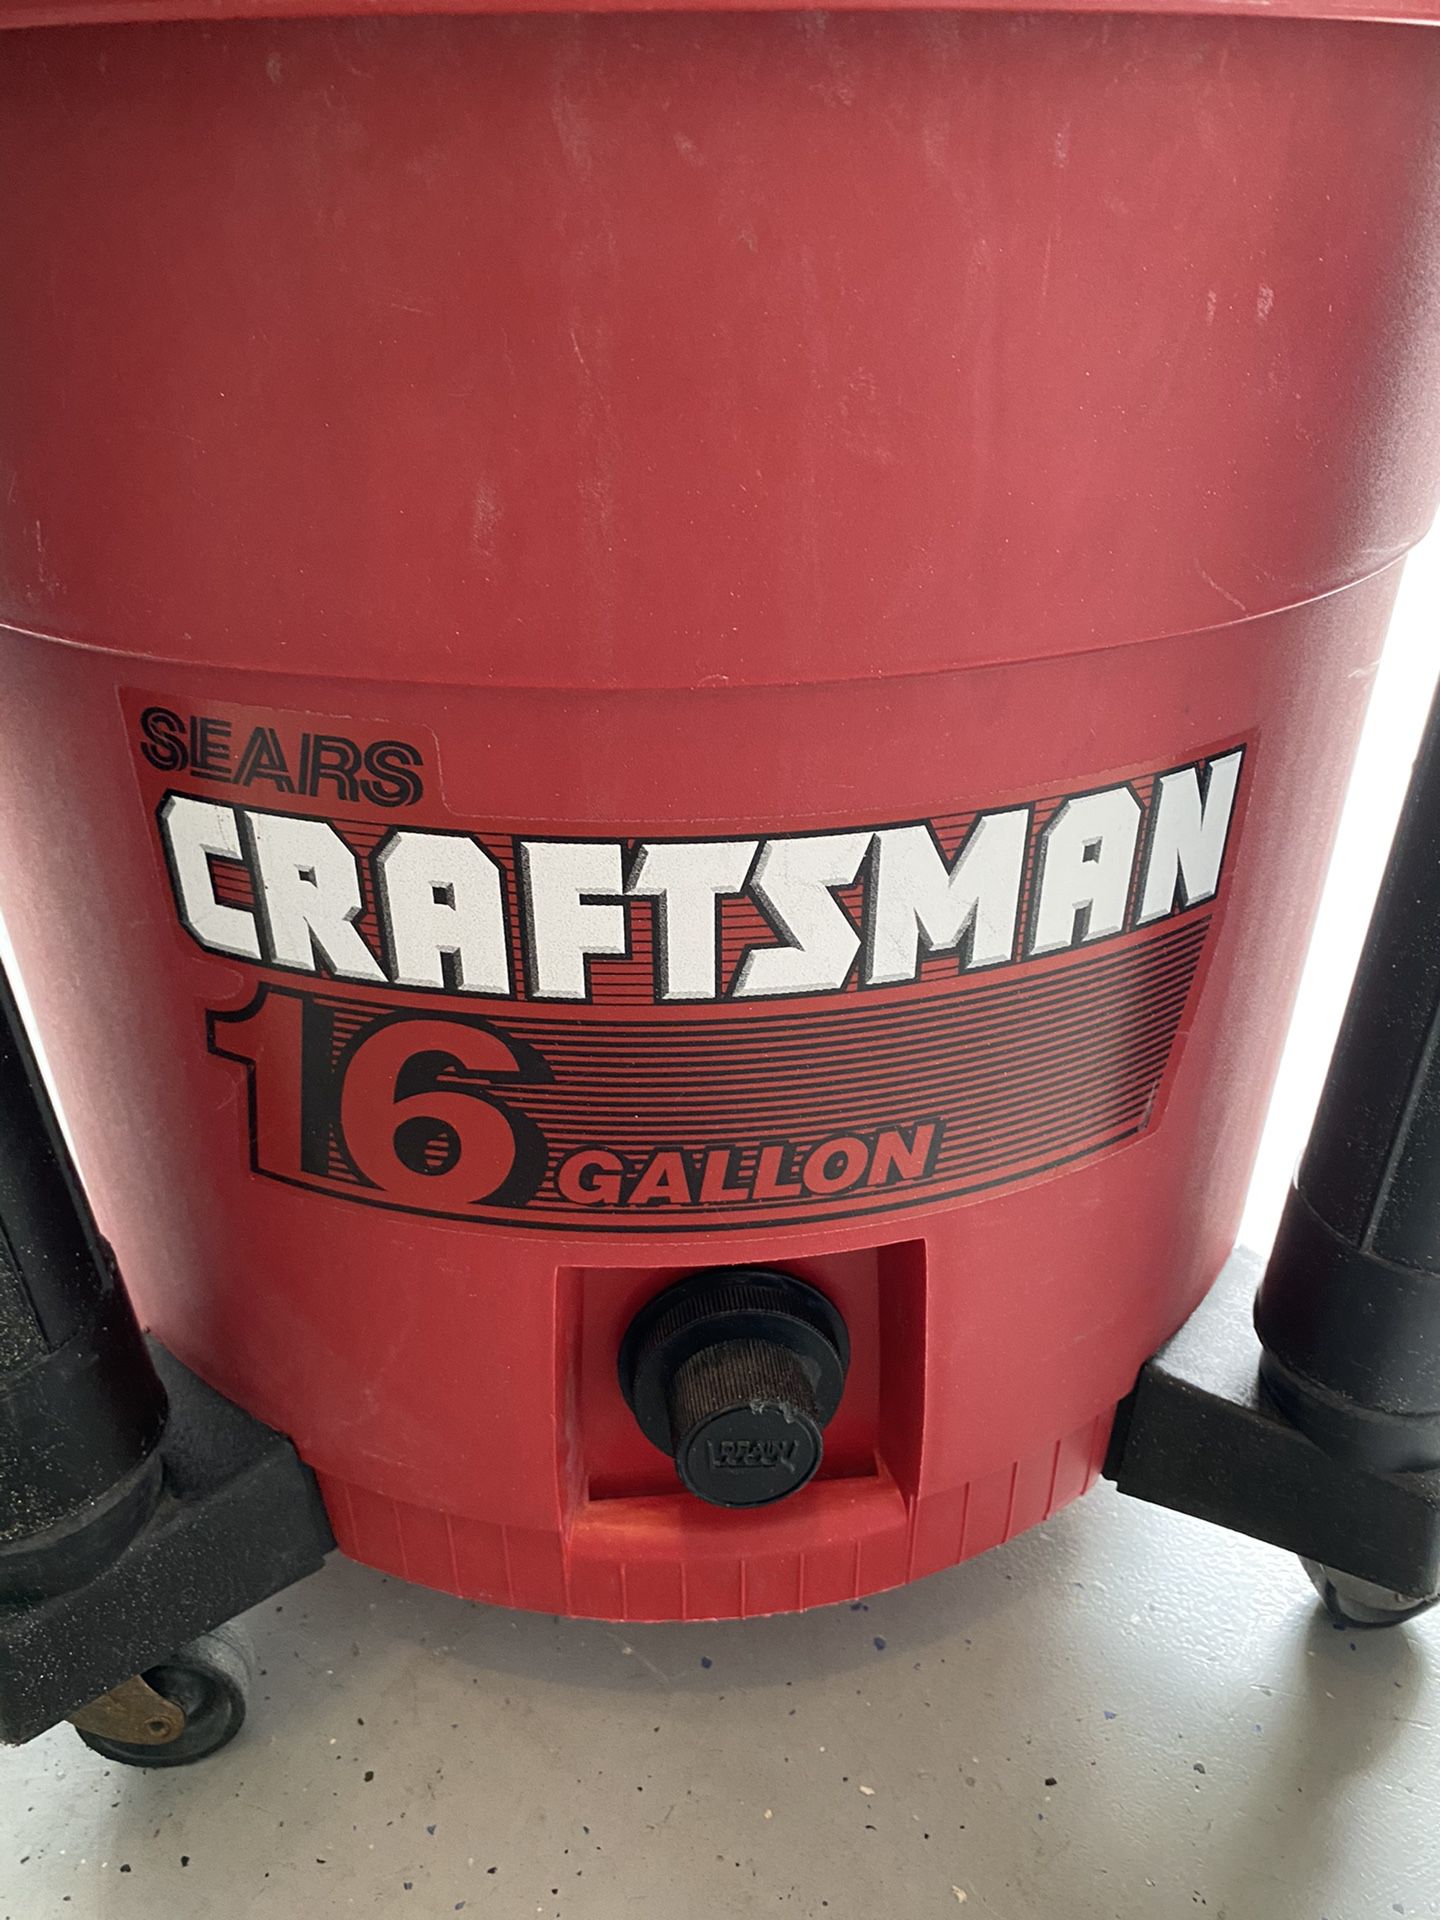 Craftsman 16 gallon wet/dry vac